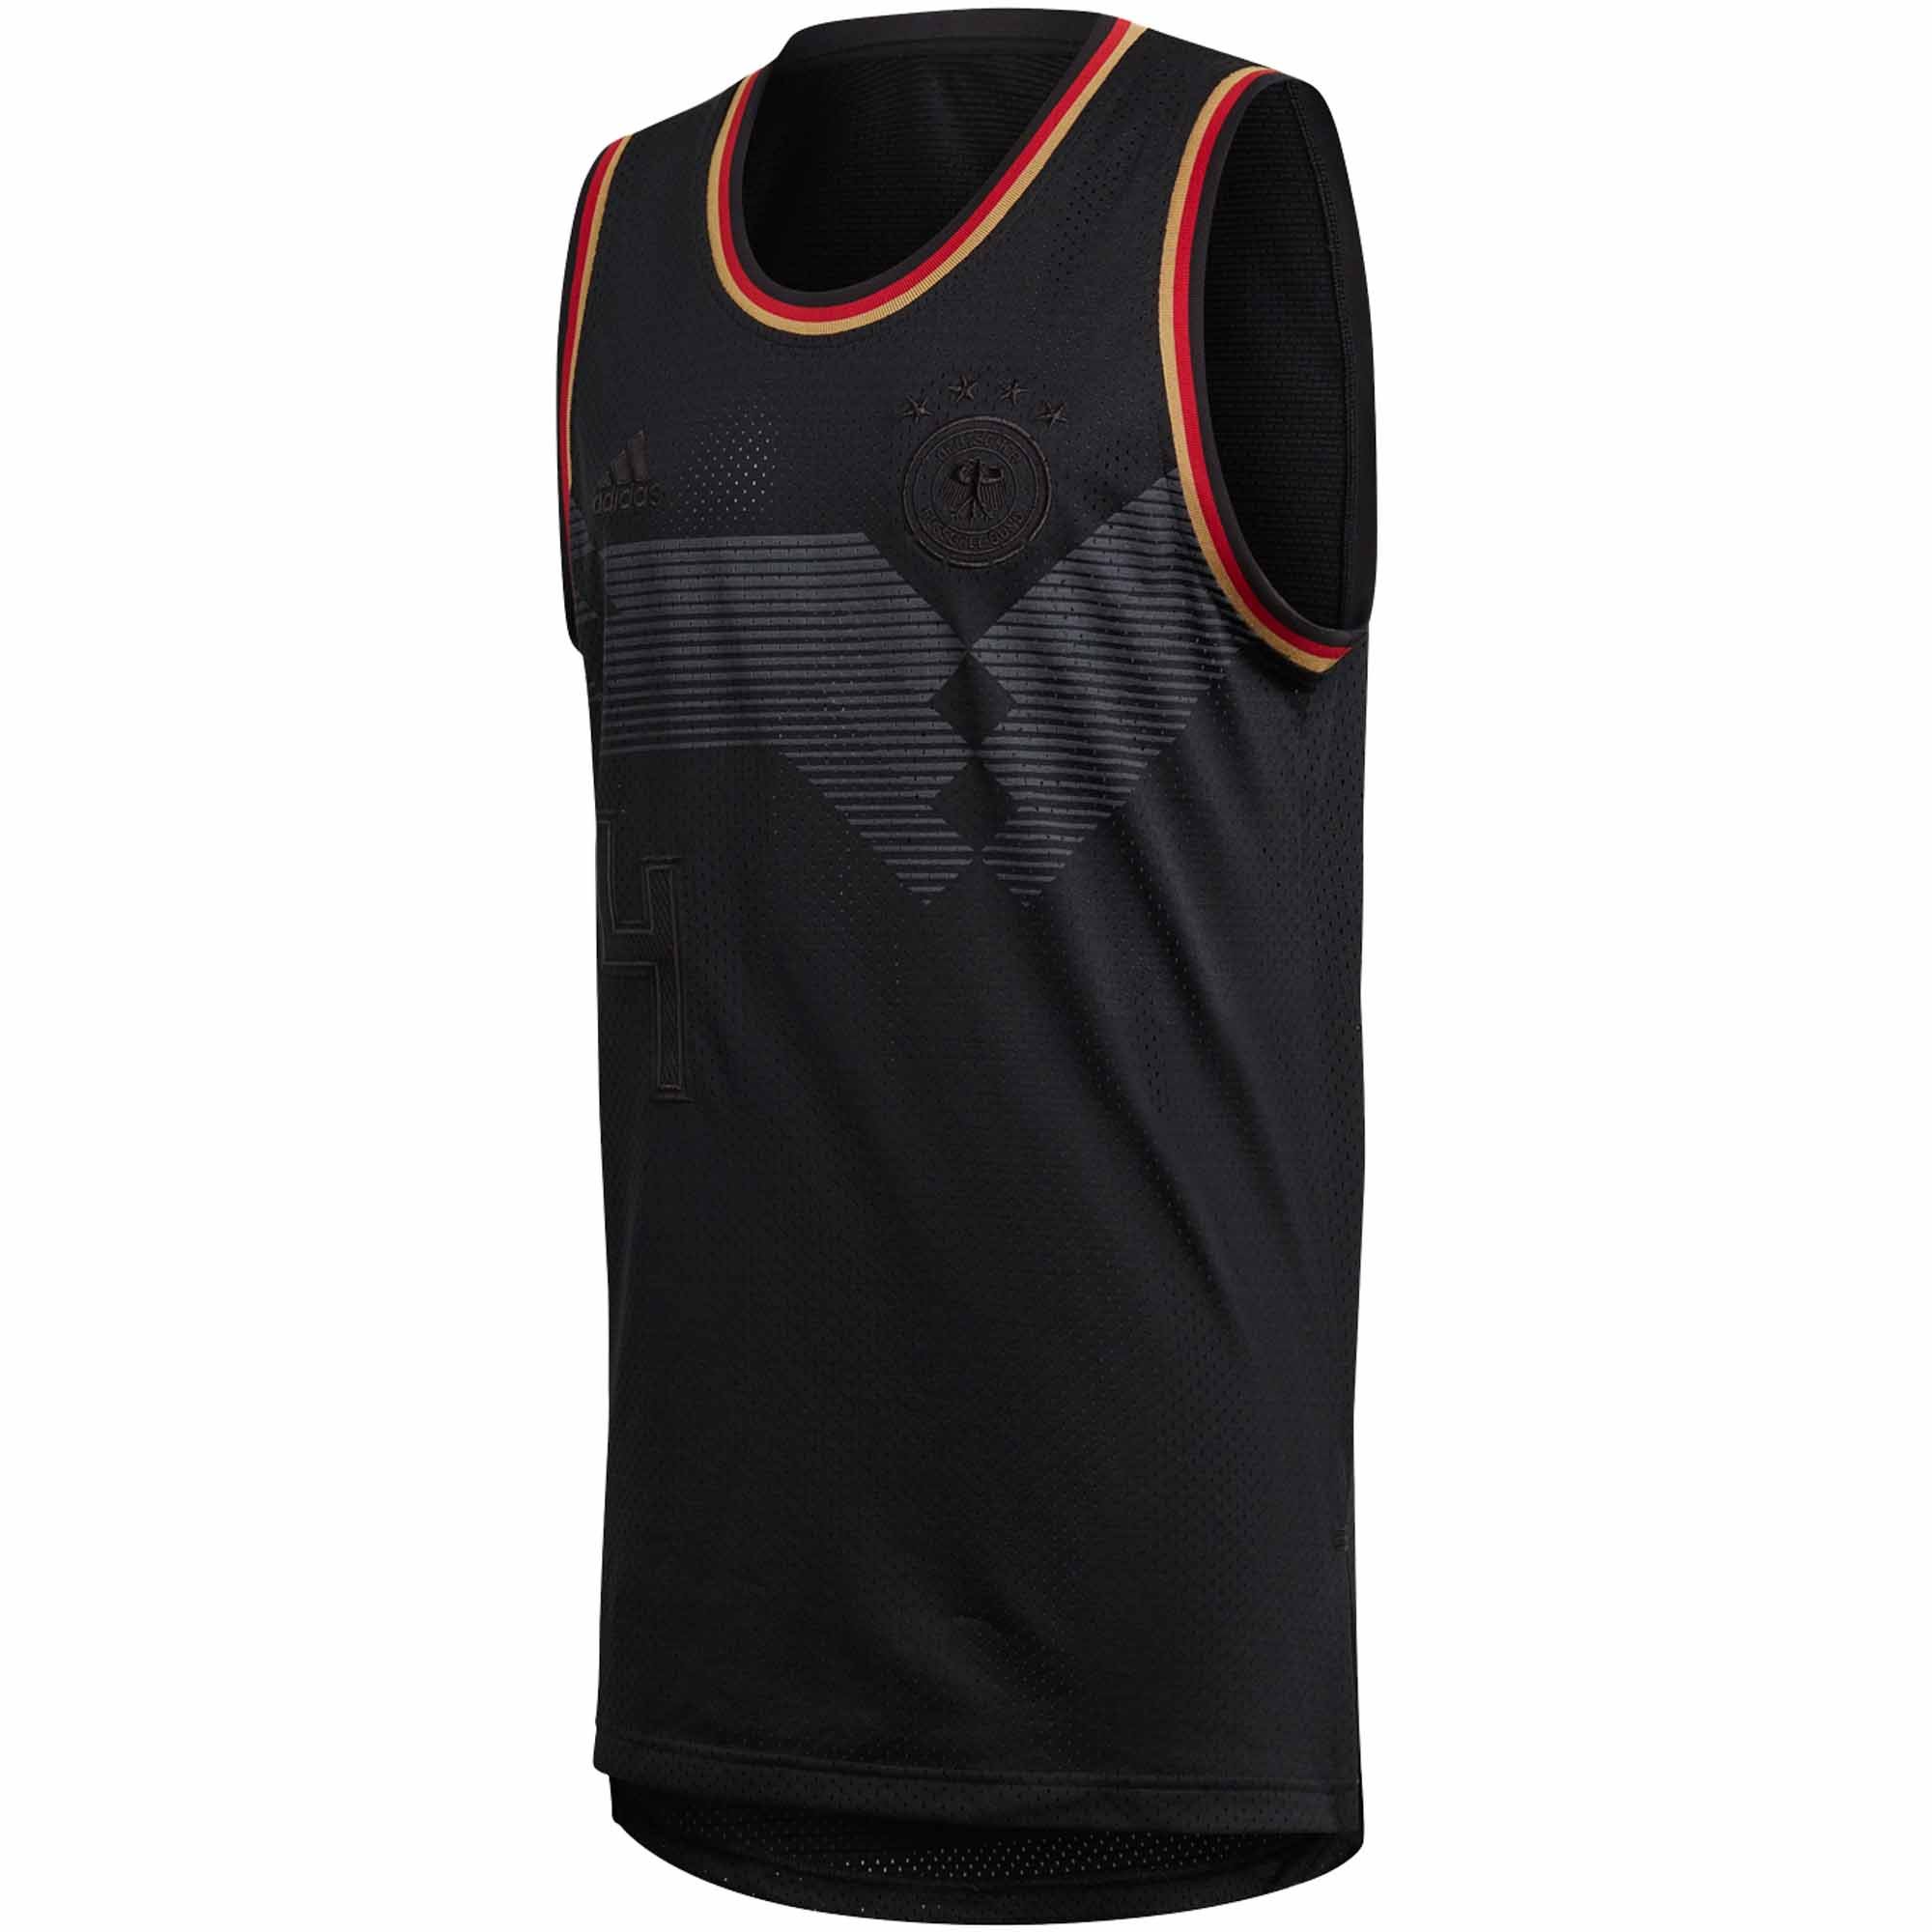 adidas basketball vest